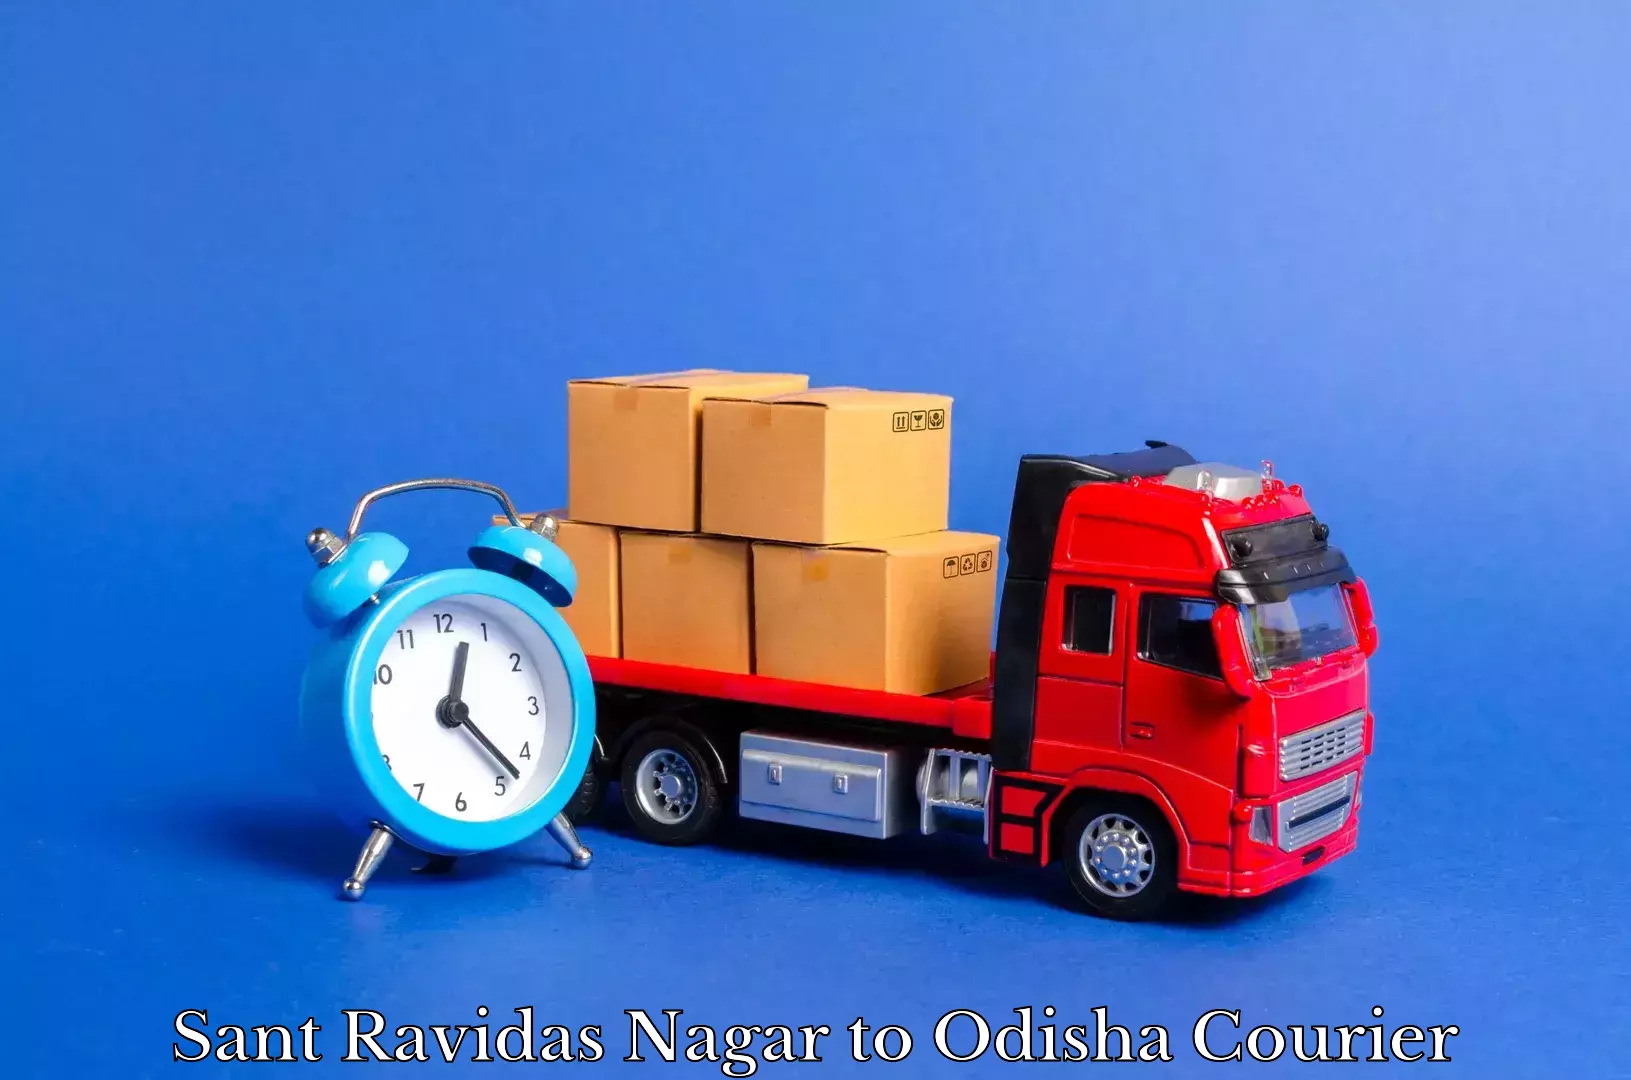 Furniture delivery service Sant Ravidas Nagar to Balasore